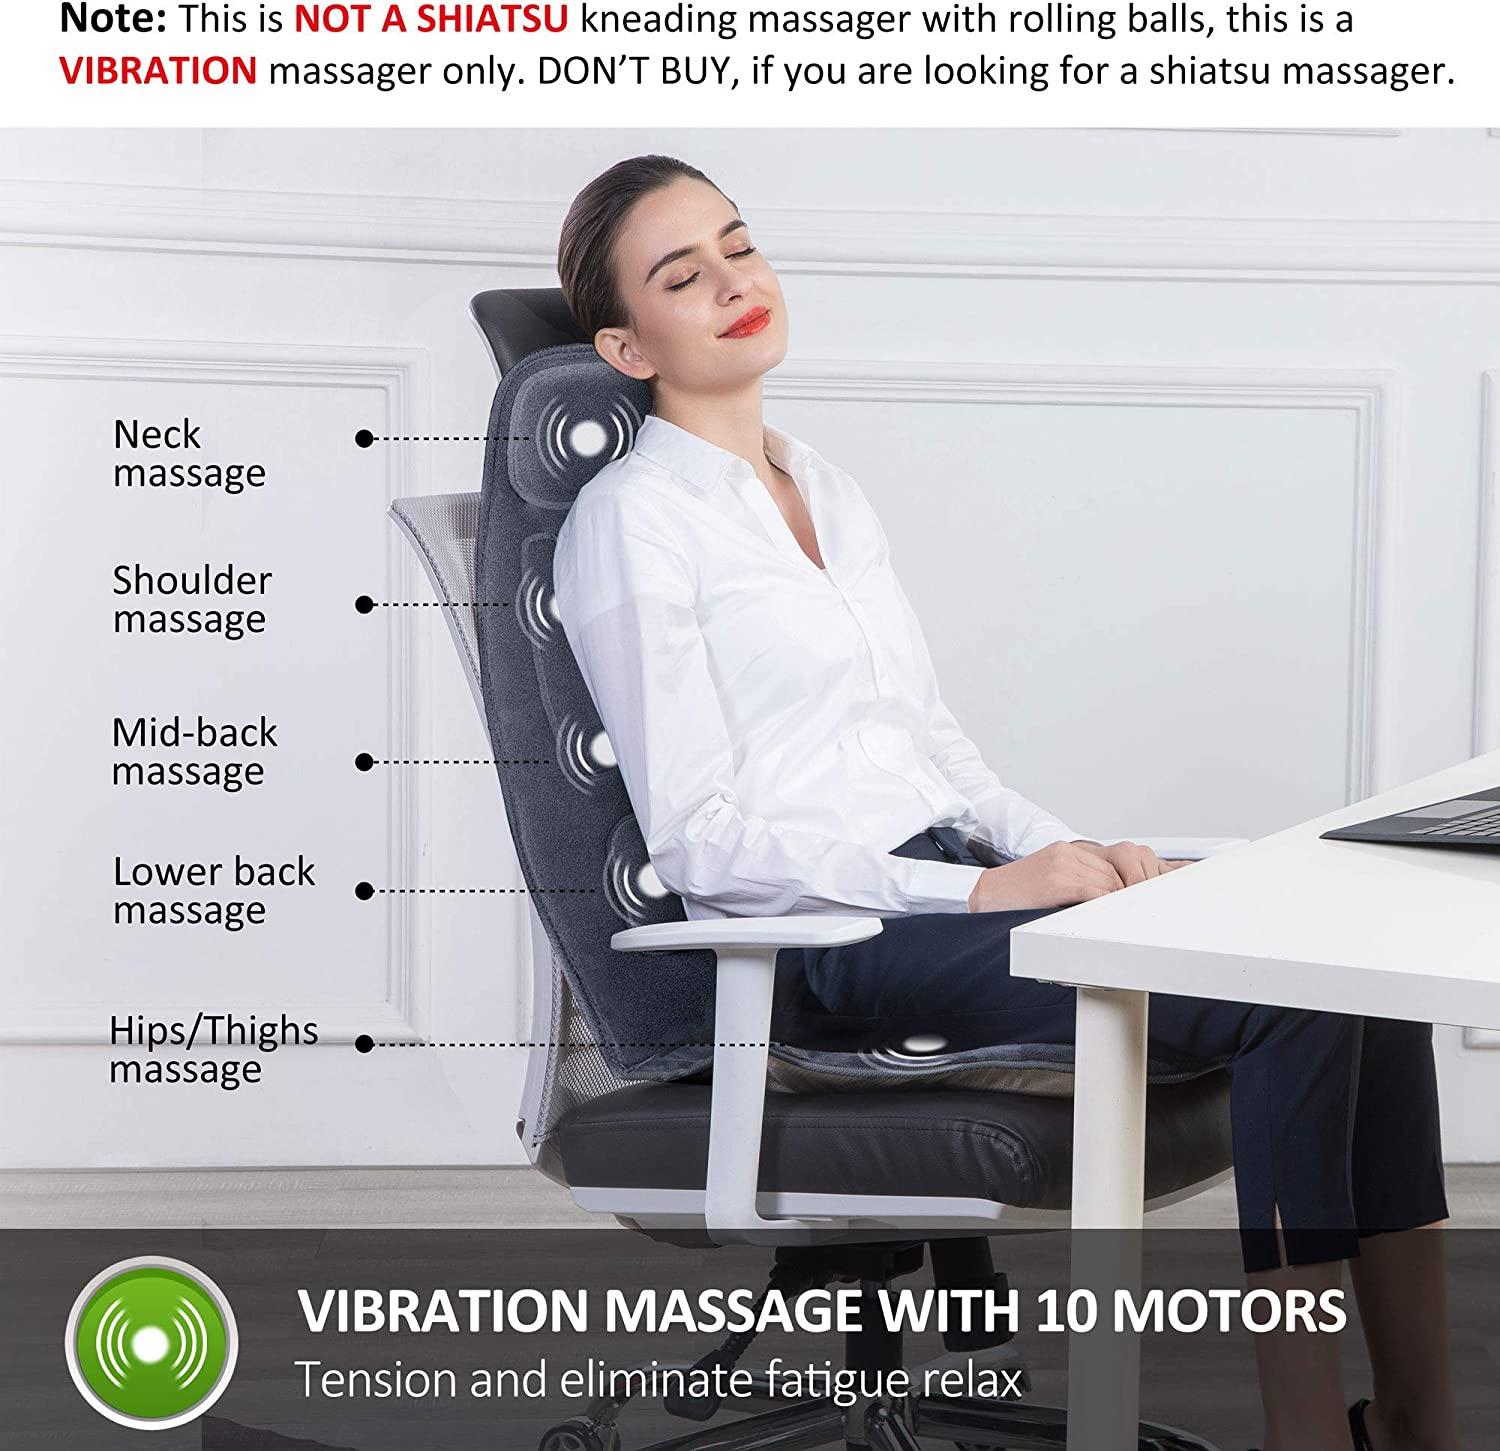 Giantex Back Massager Chair Pad